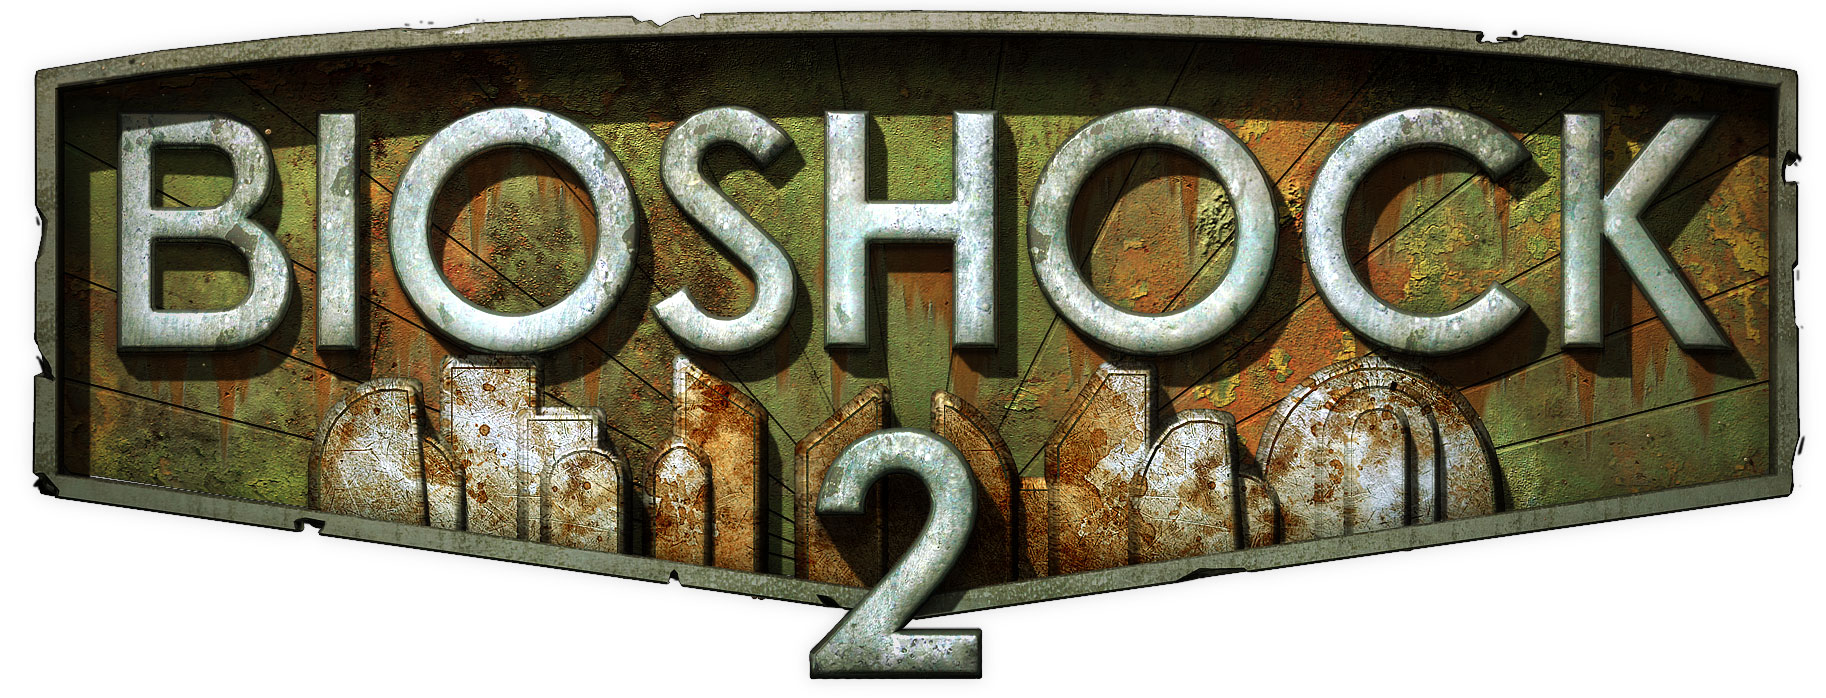 Bioshock2 logo